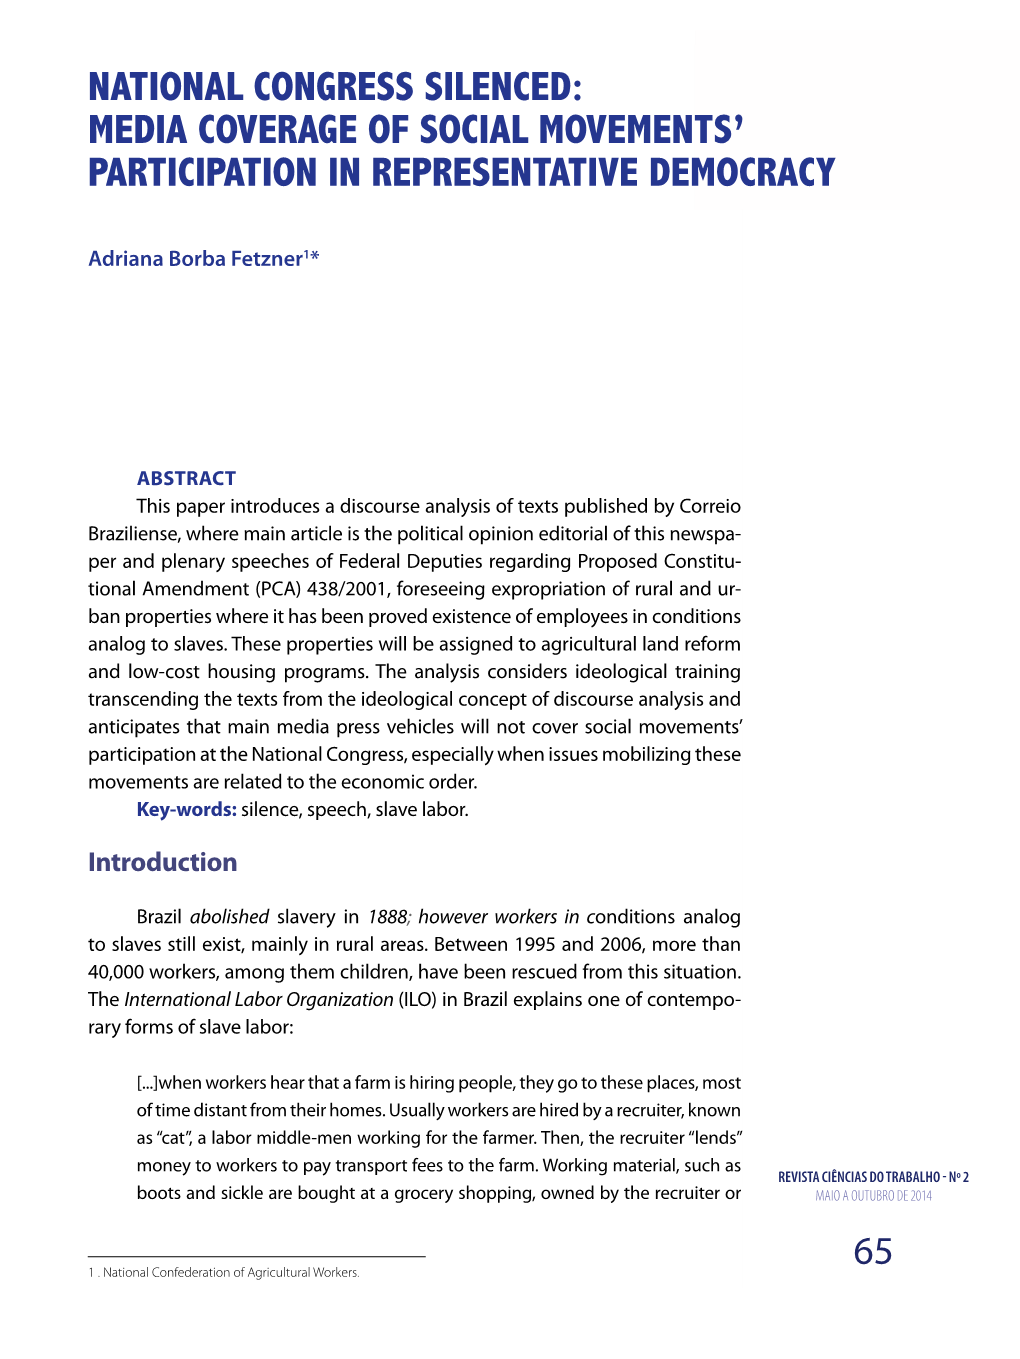 National Congress Silenced: Media Coverage of Social Movements’ Participation in Representative Democracy